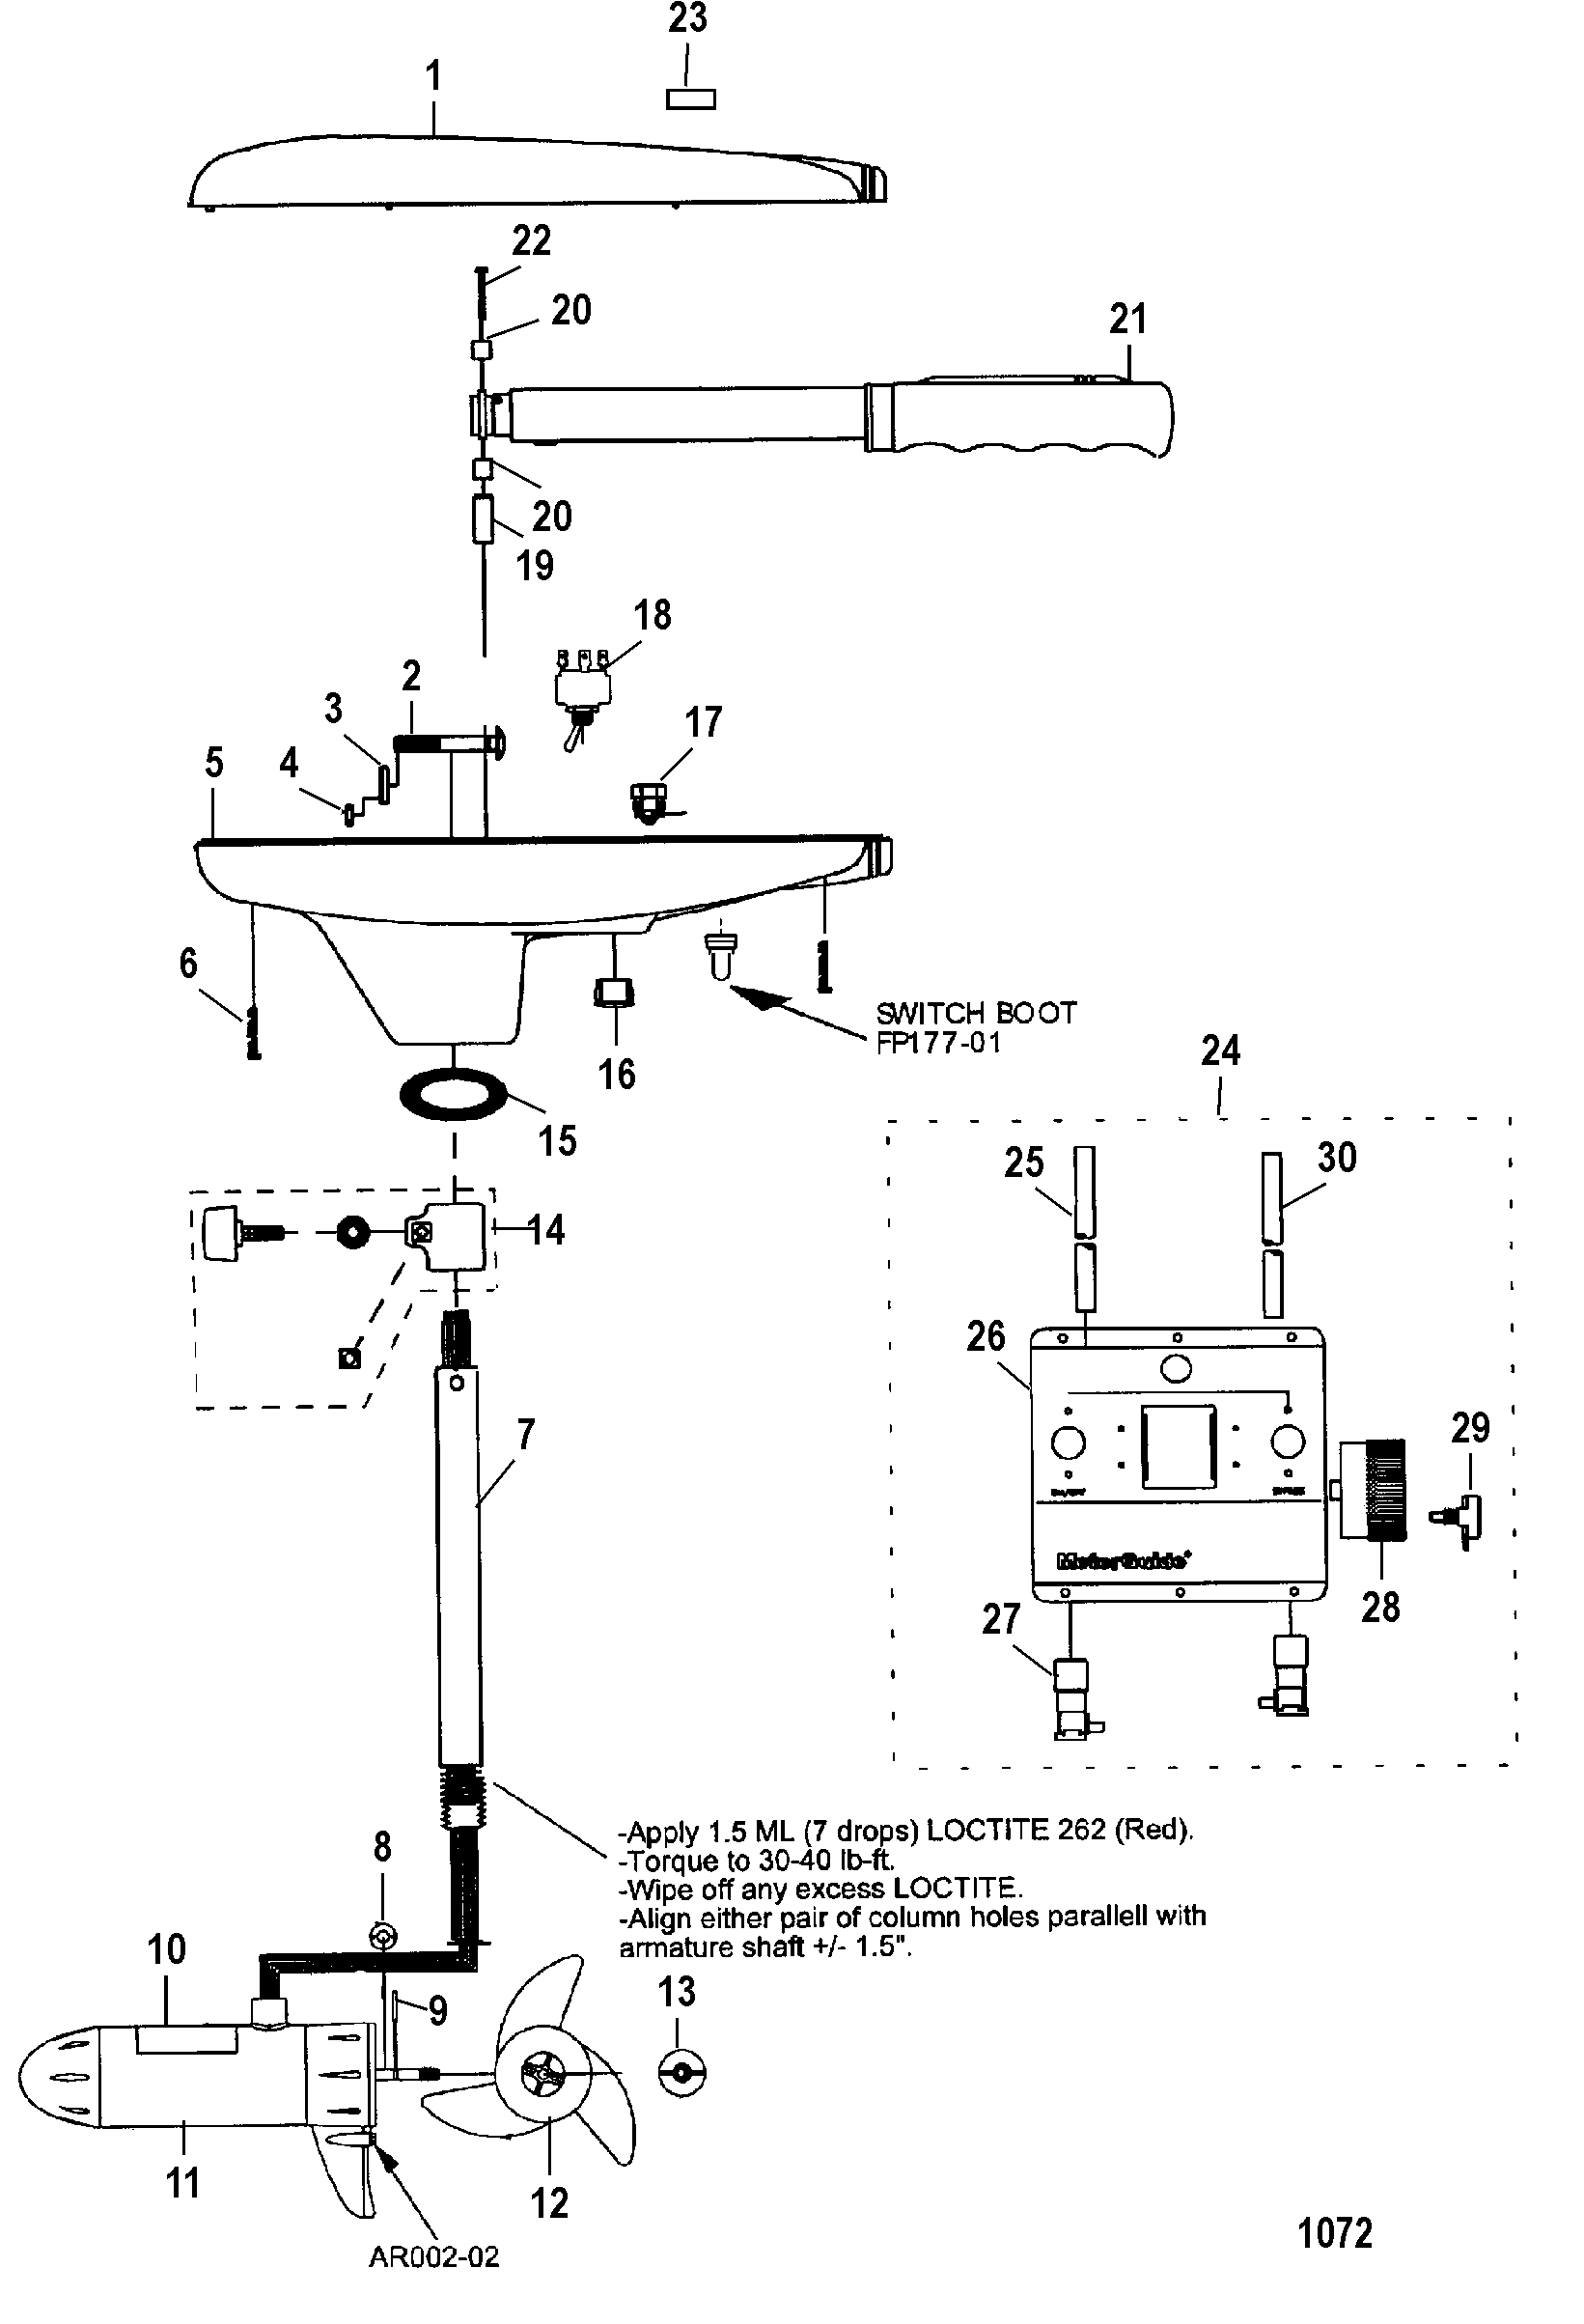 motor guide wiring diagram